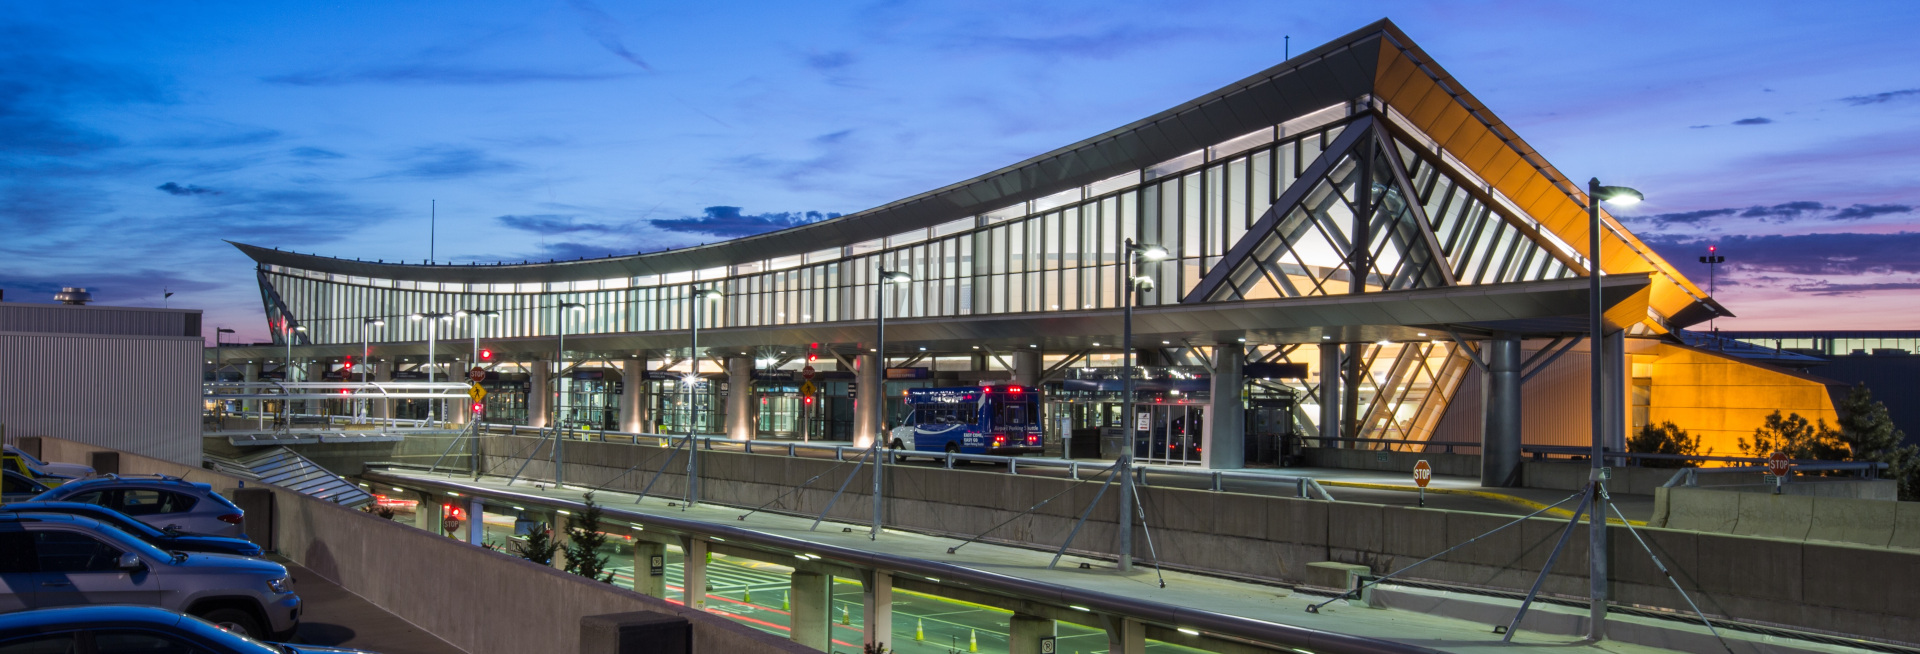 Buffalo International Airport Eco-friendly and passenger-centered | Business View Magazine